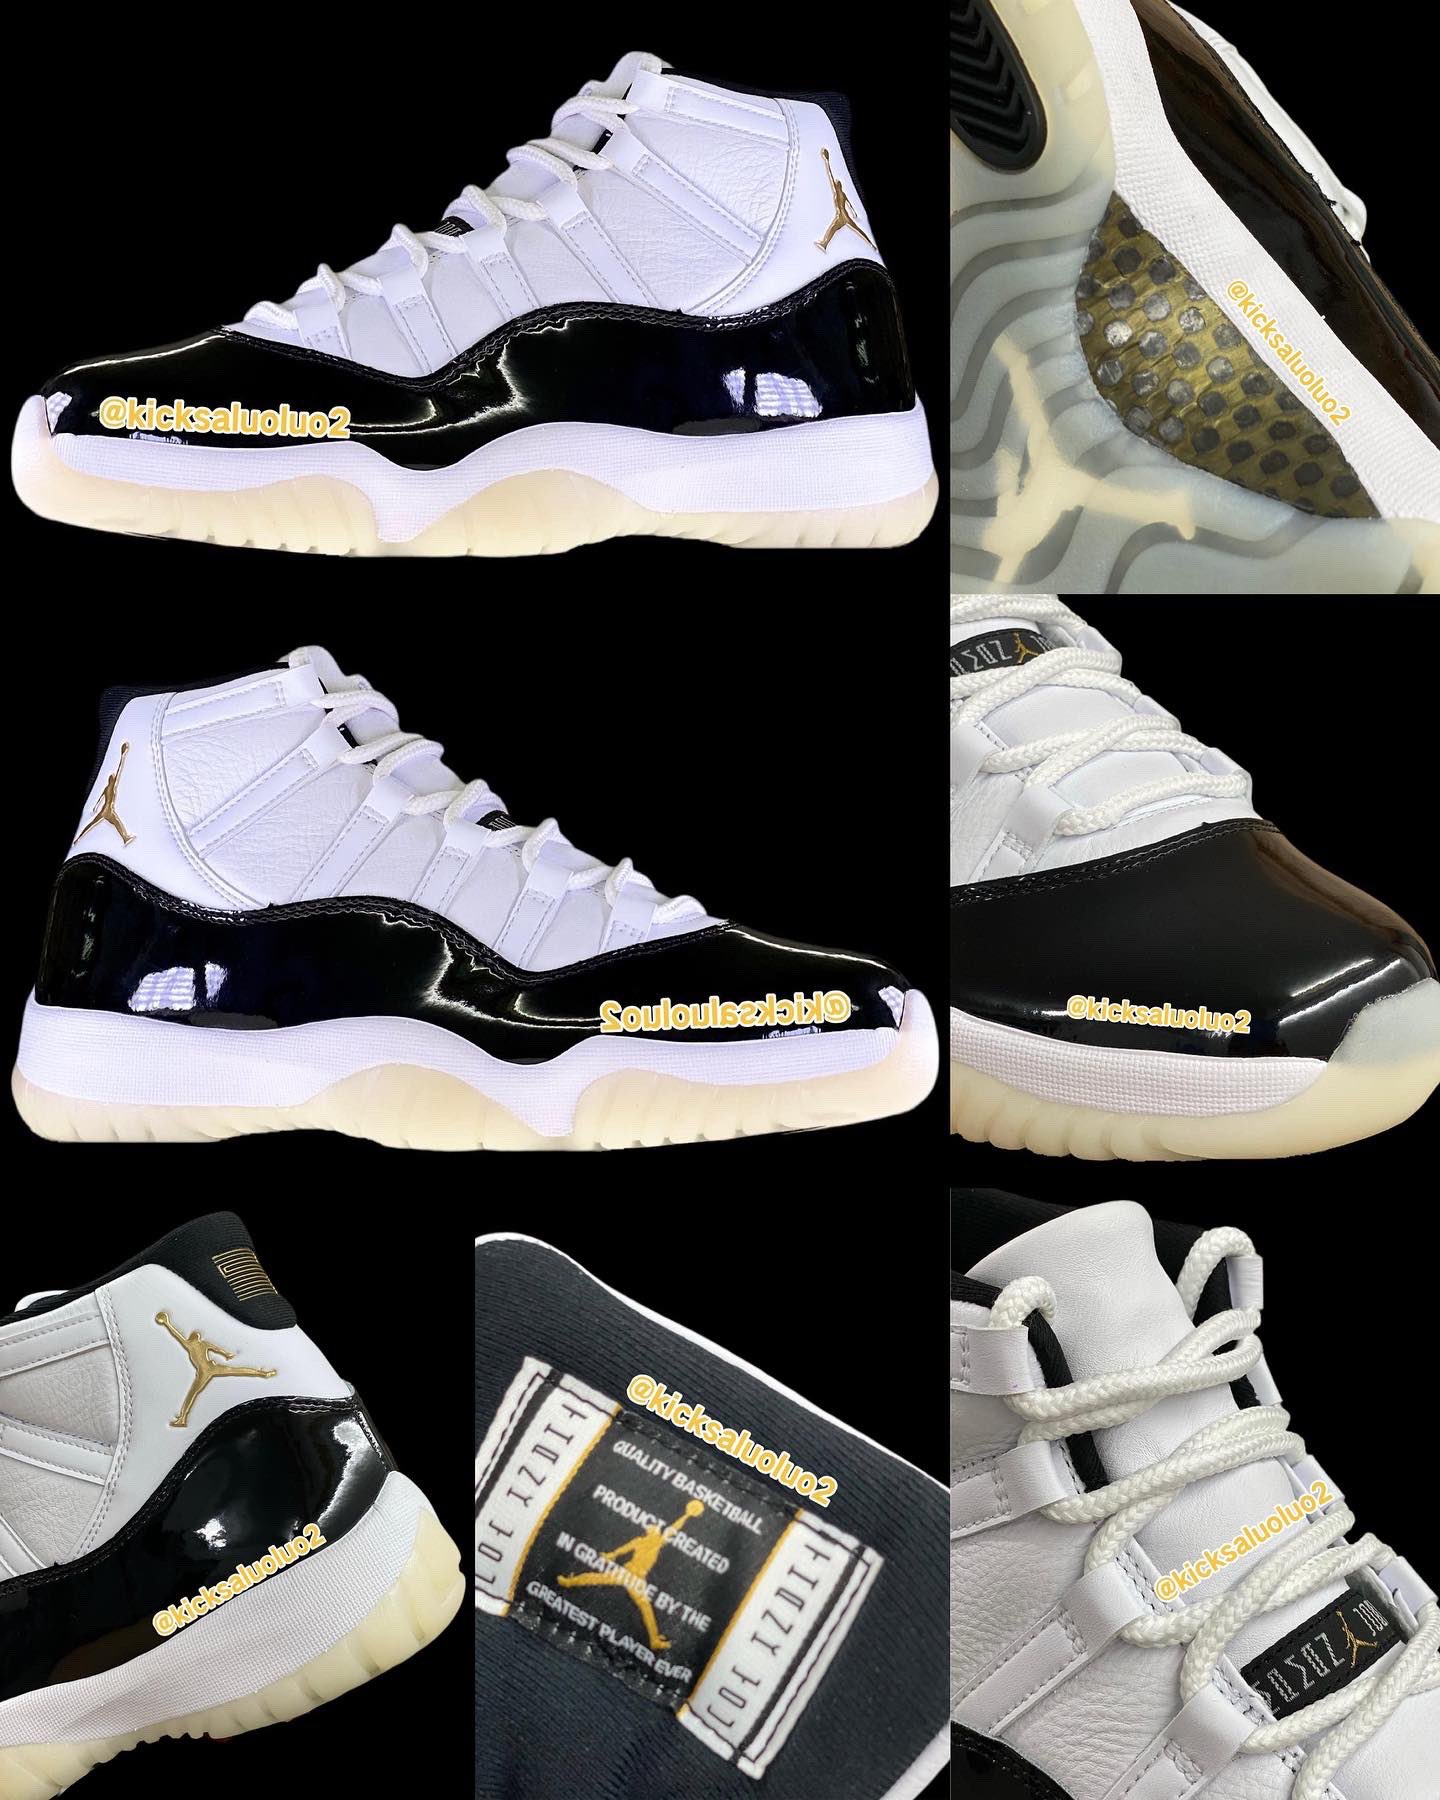 zSneakerHeadz on X: FIRST LOOK at the 2023 #DMP Air Jordan 11